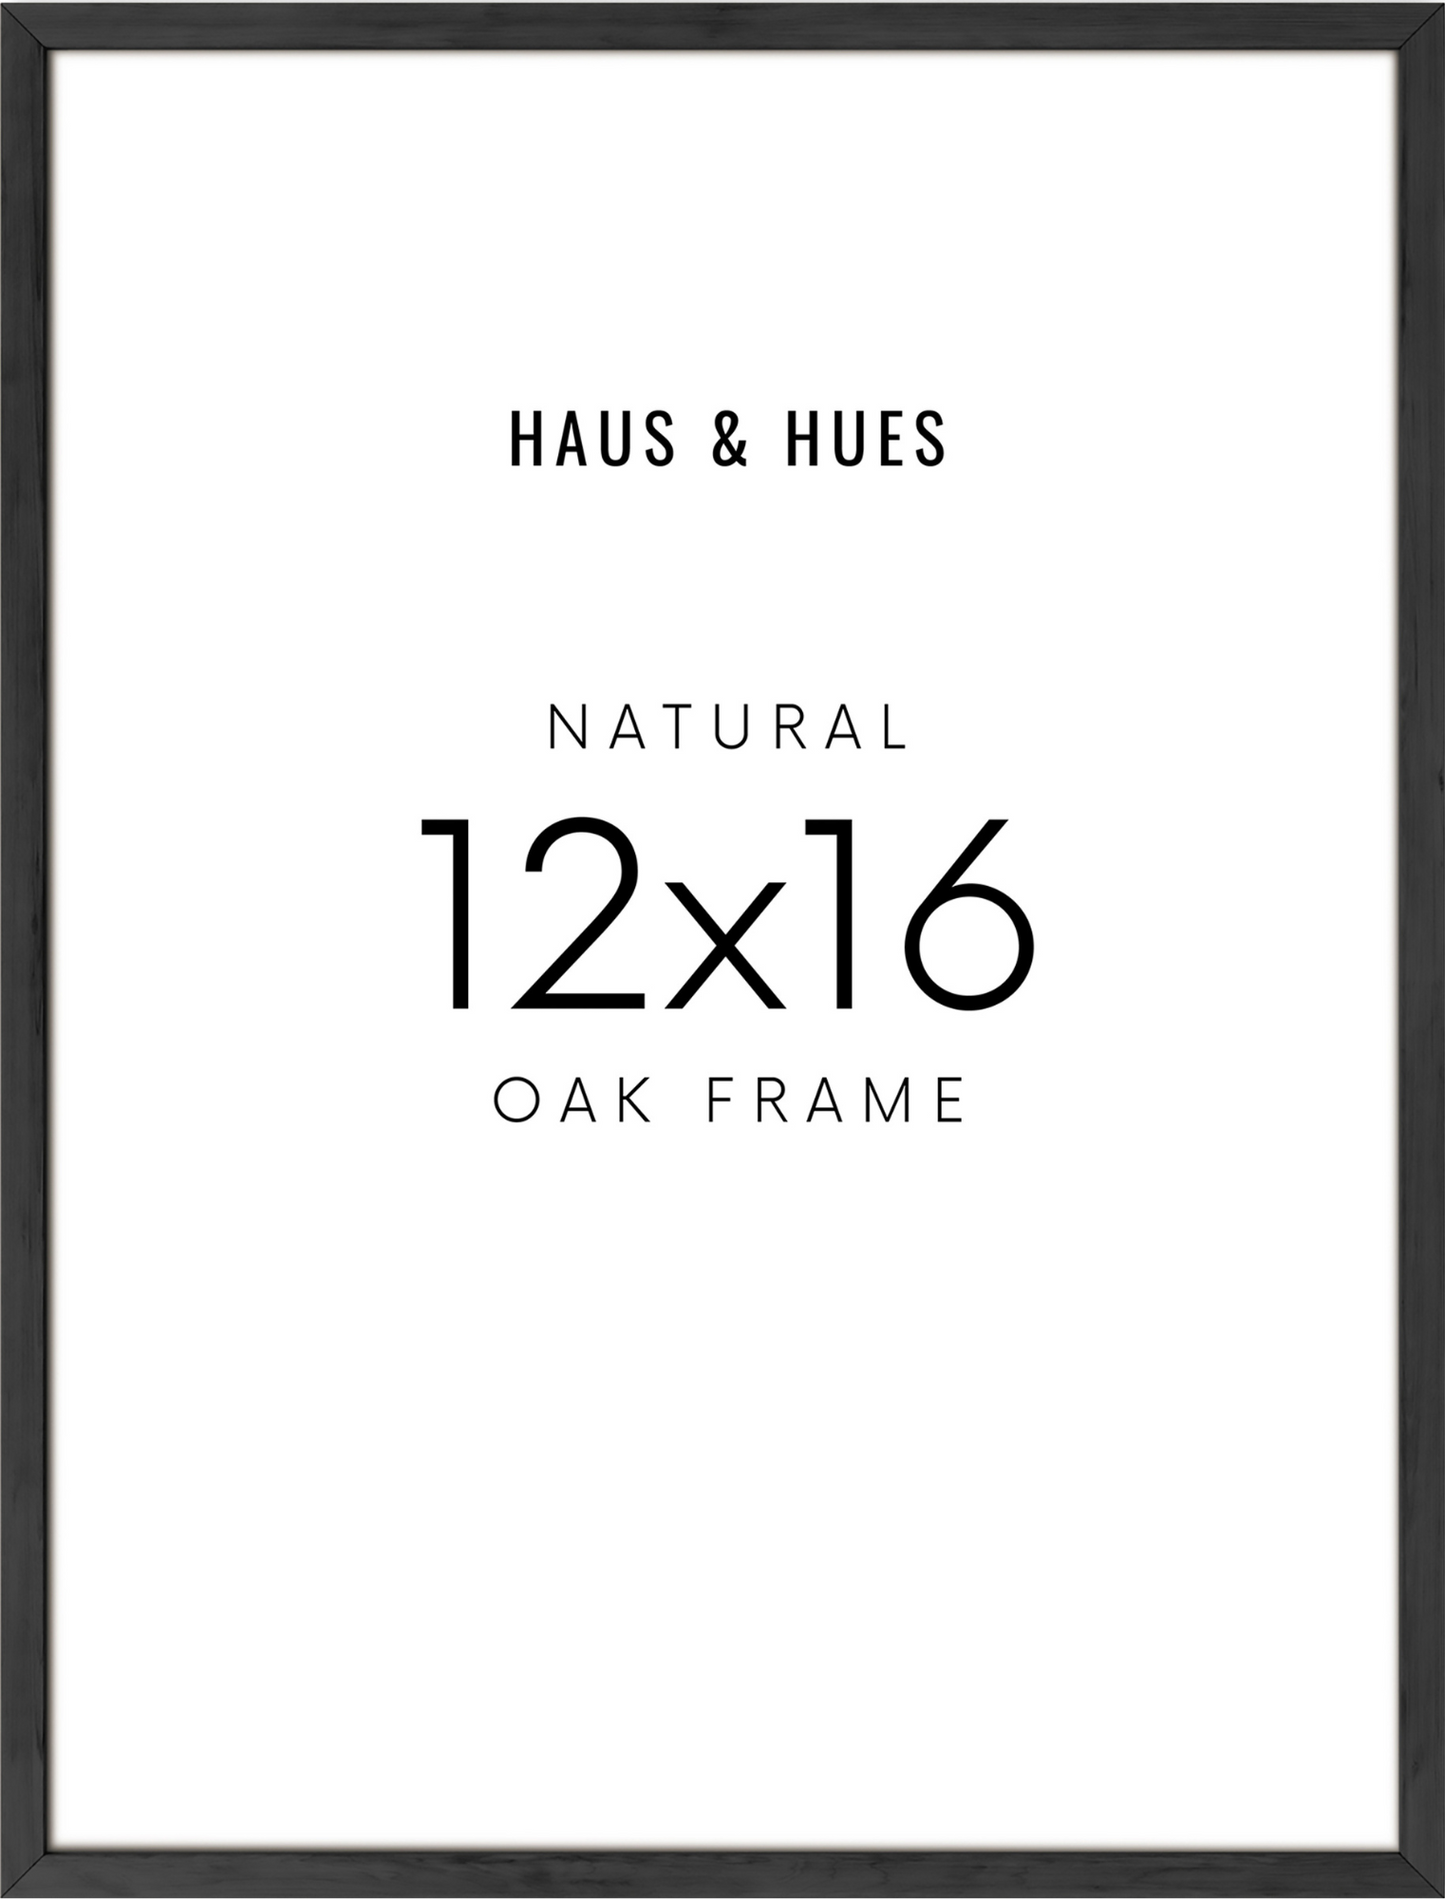 12x16 in, Individual, Black Oak Frame